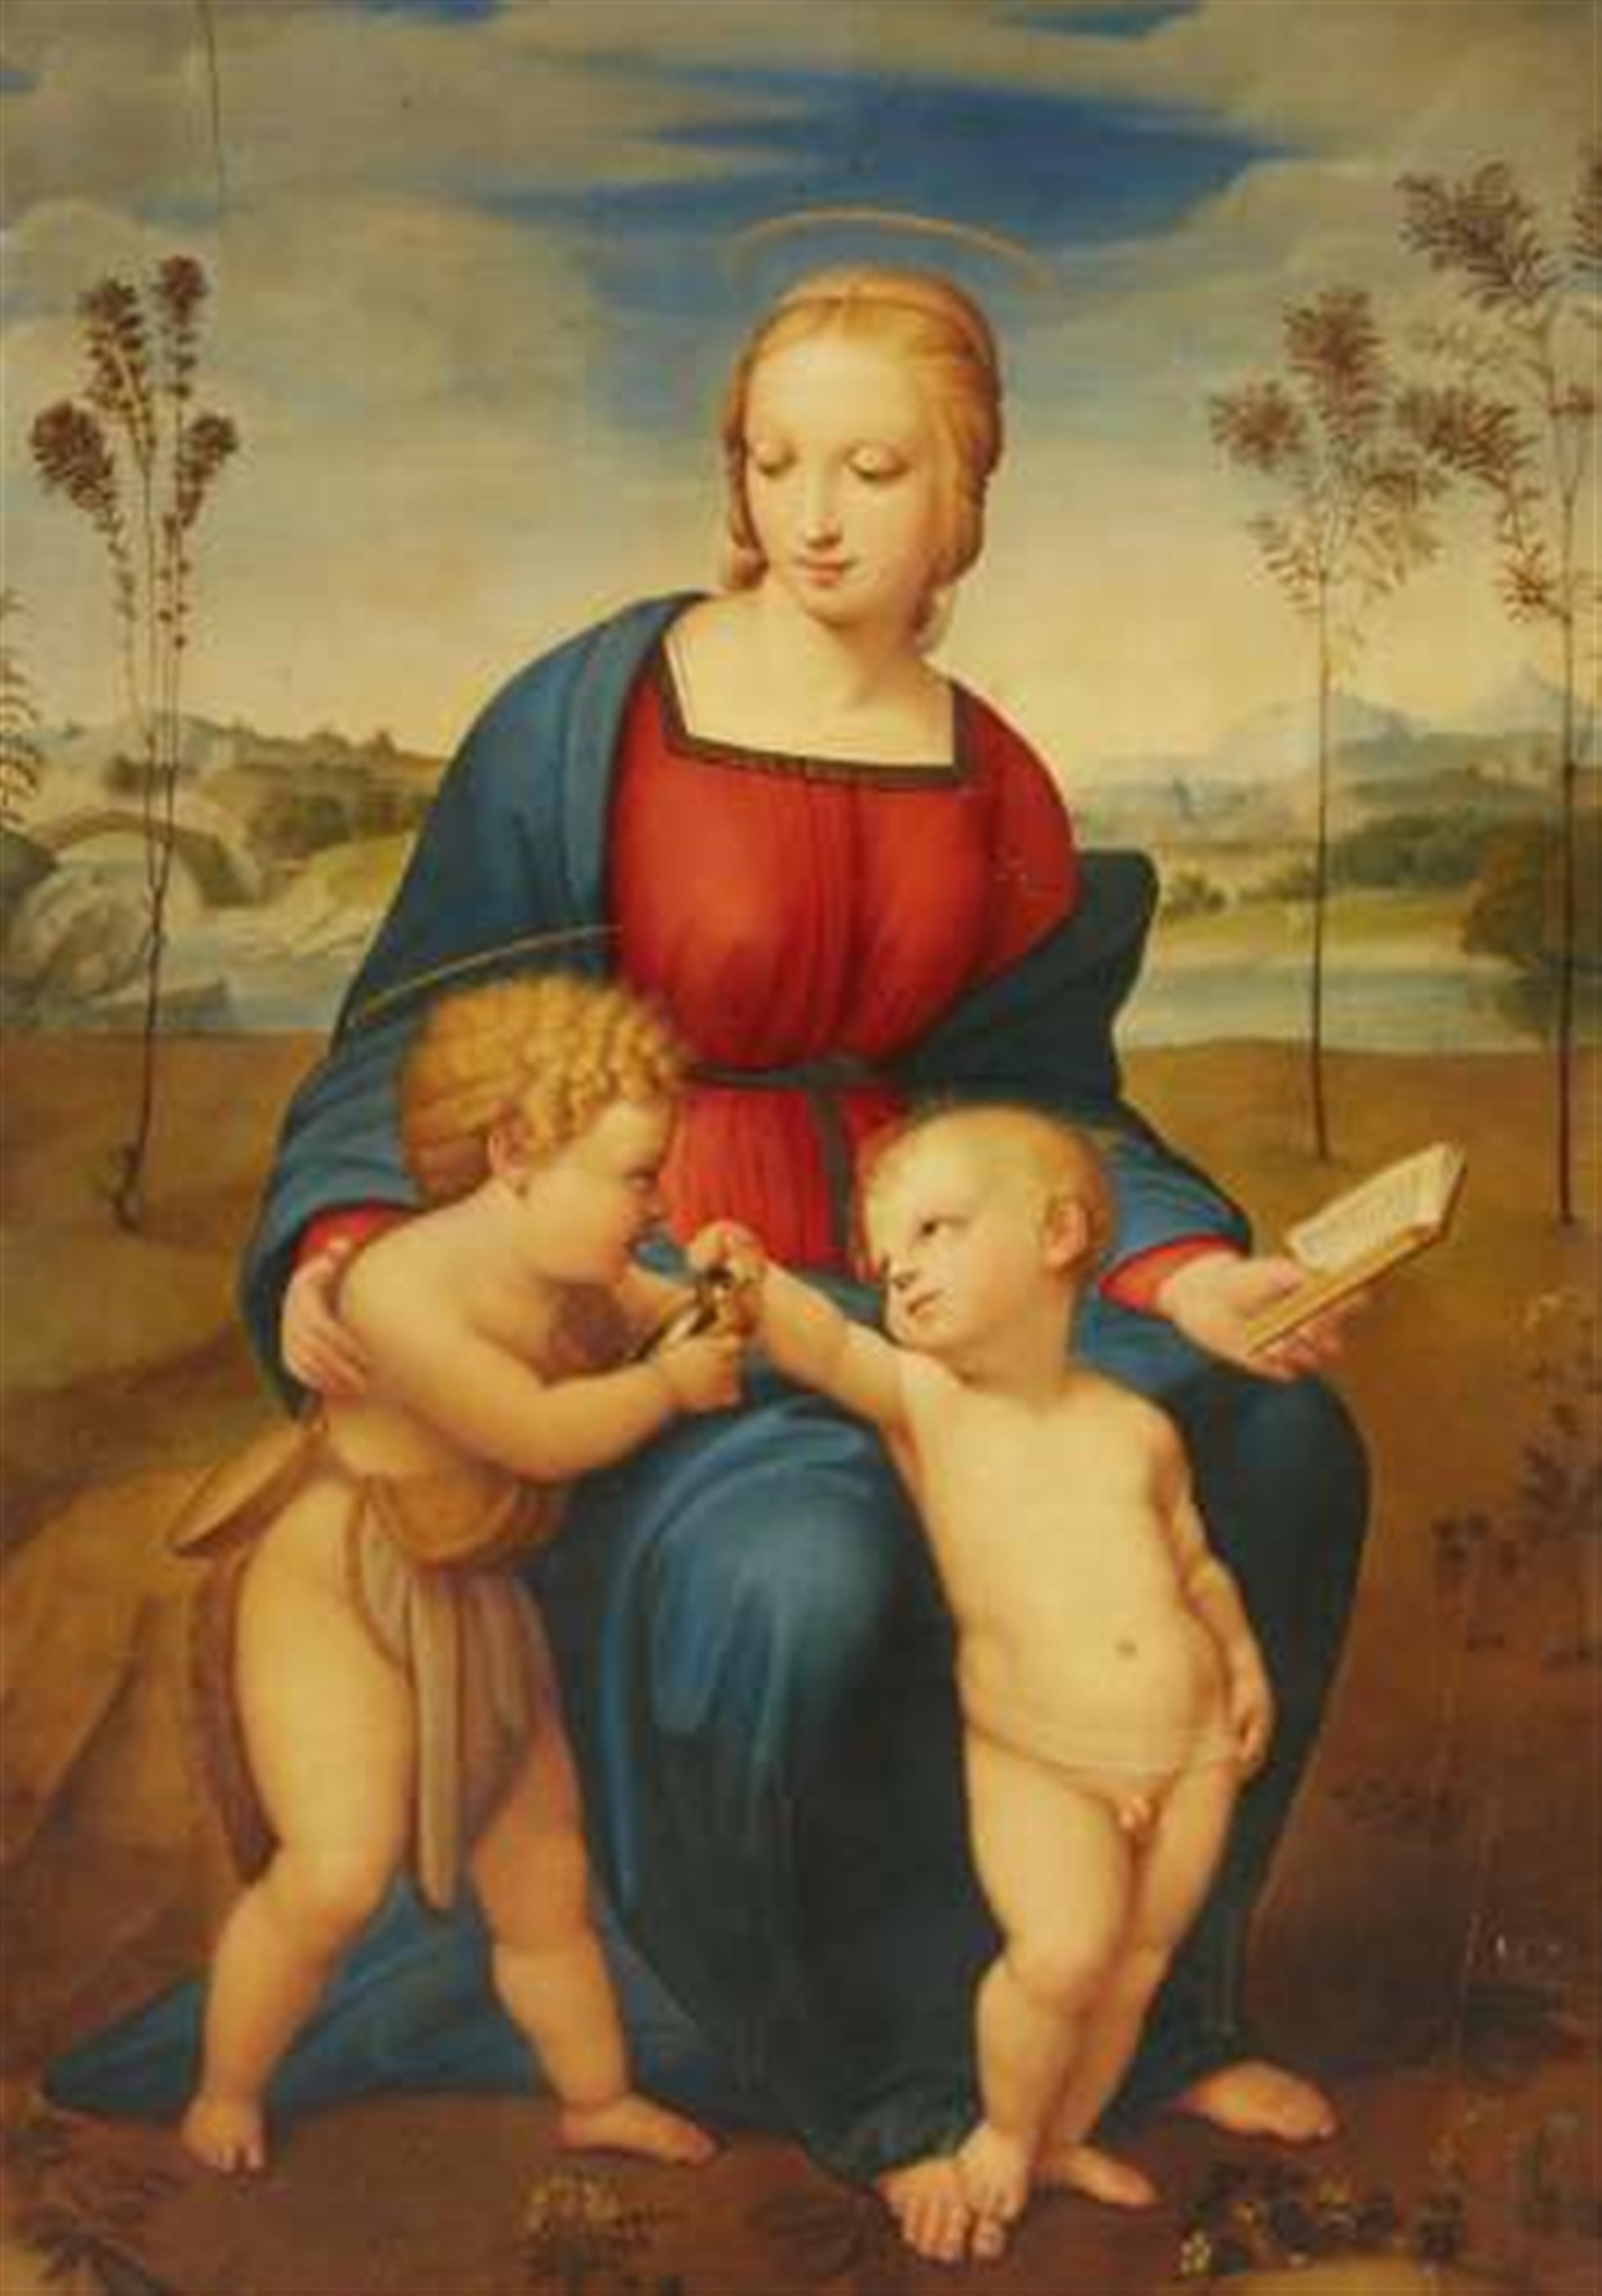 Raffaelo Sanzio, called Raphael, copy after - Madonna del Cardellino (The Madonna with the Goldfinch) - image-1